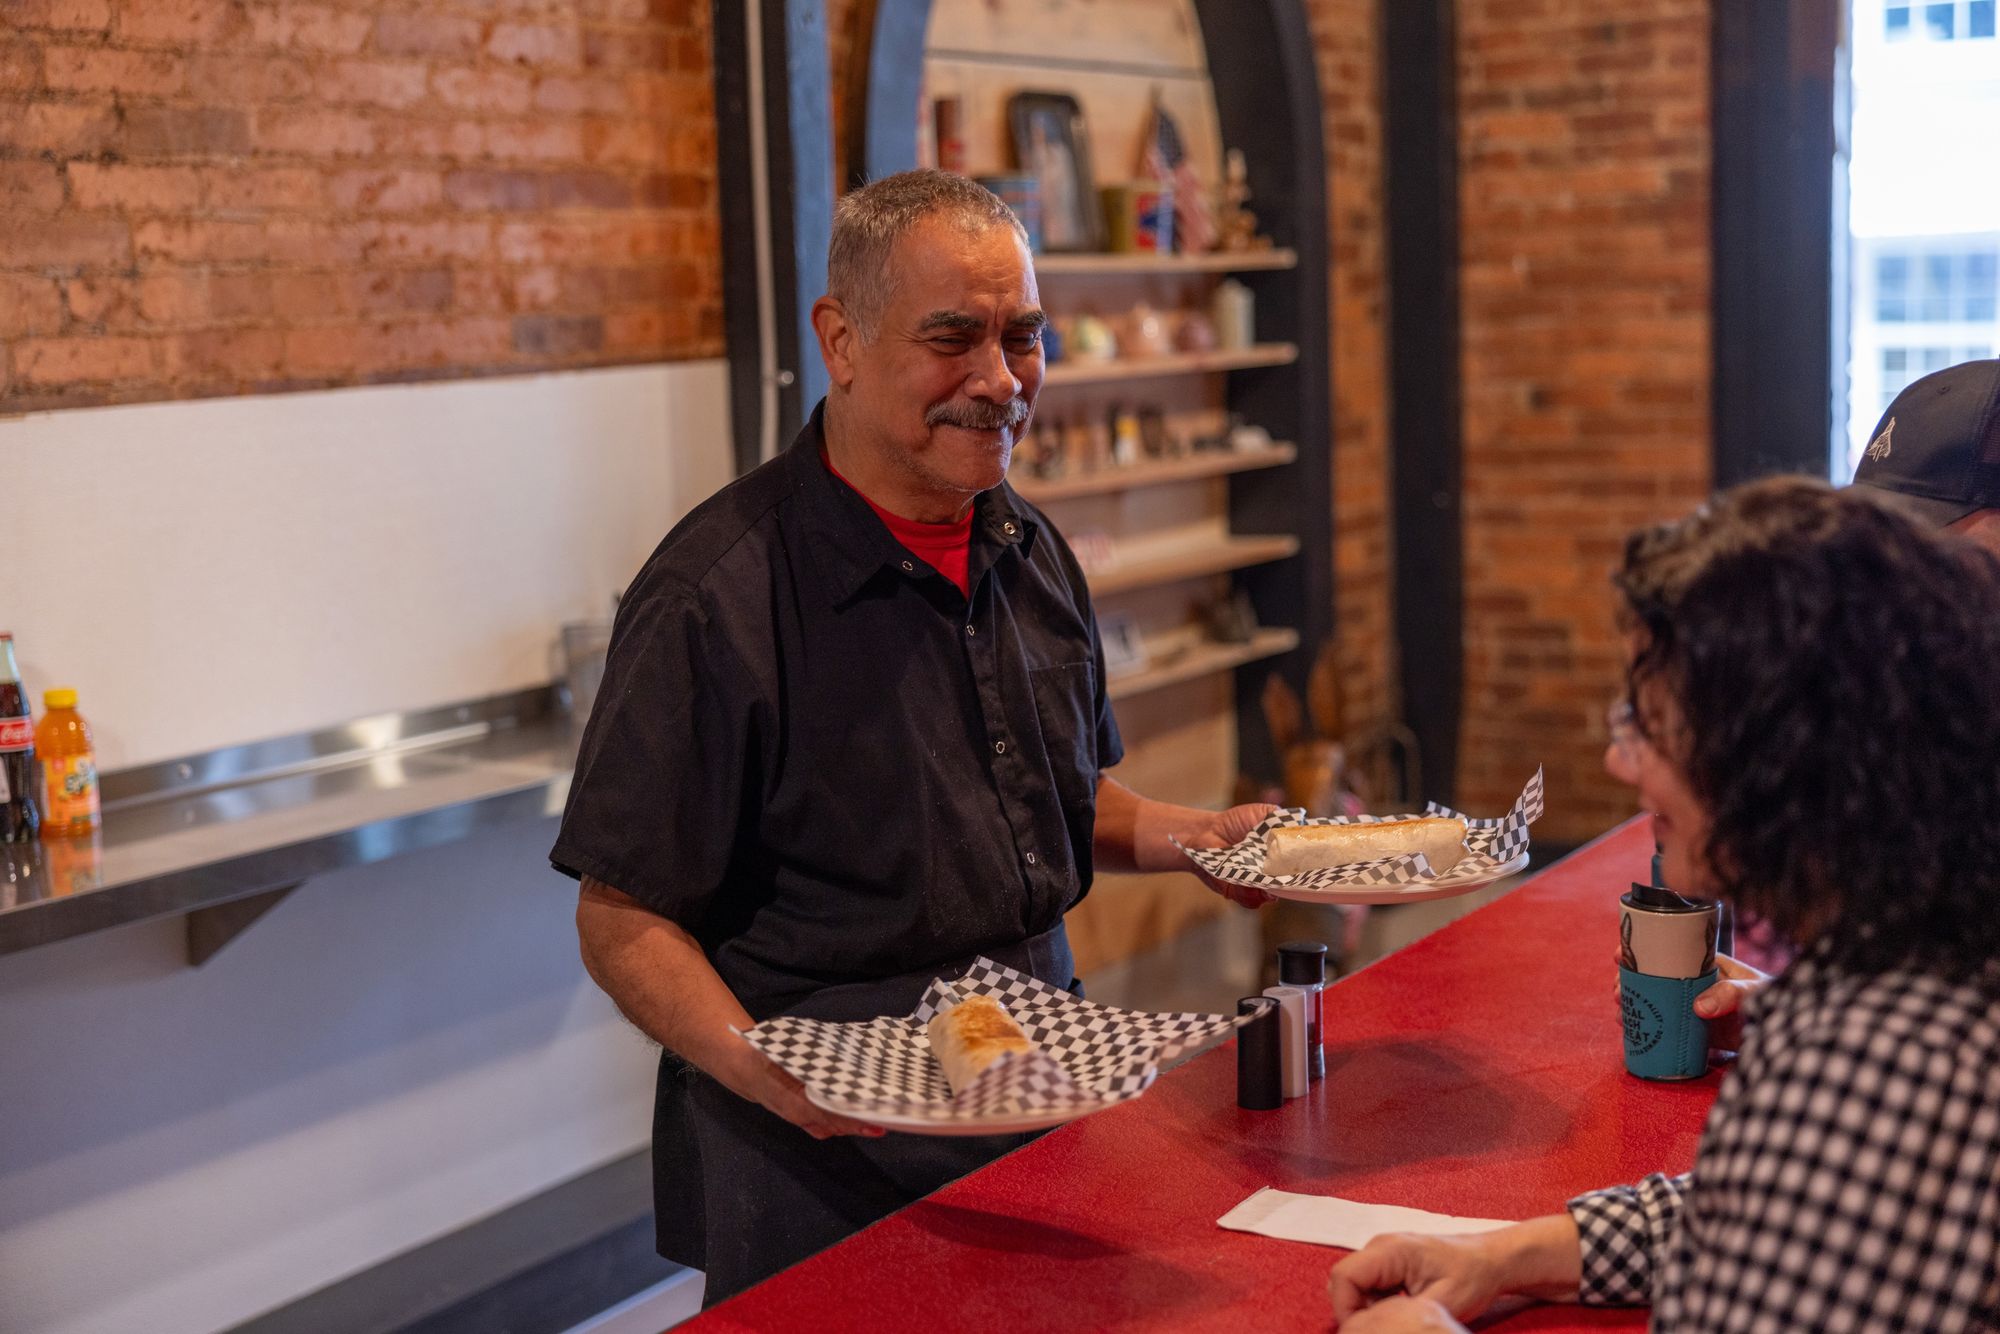 John Perez serves customers at the newly opened JADAA's Kitchen location